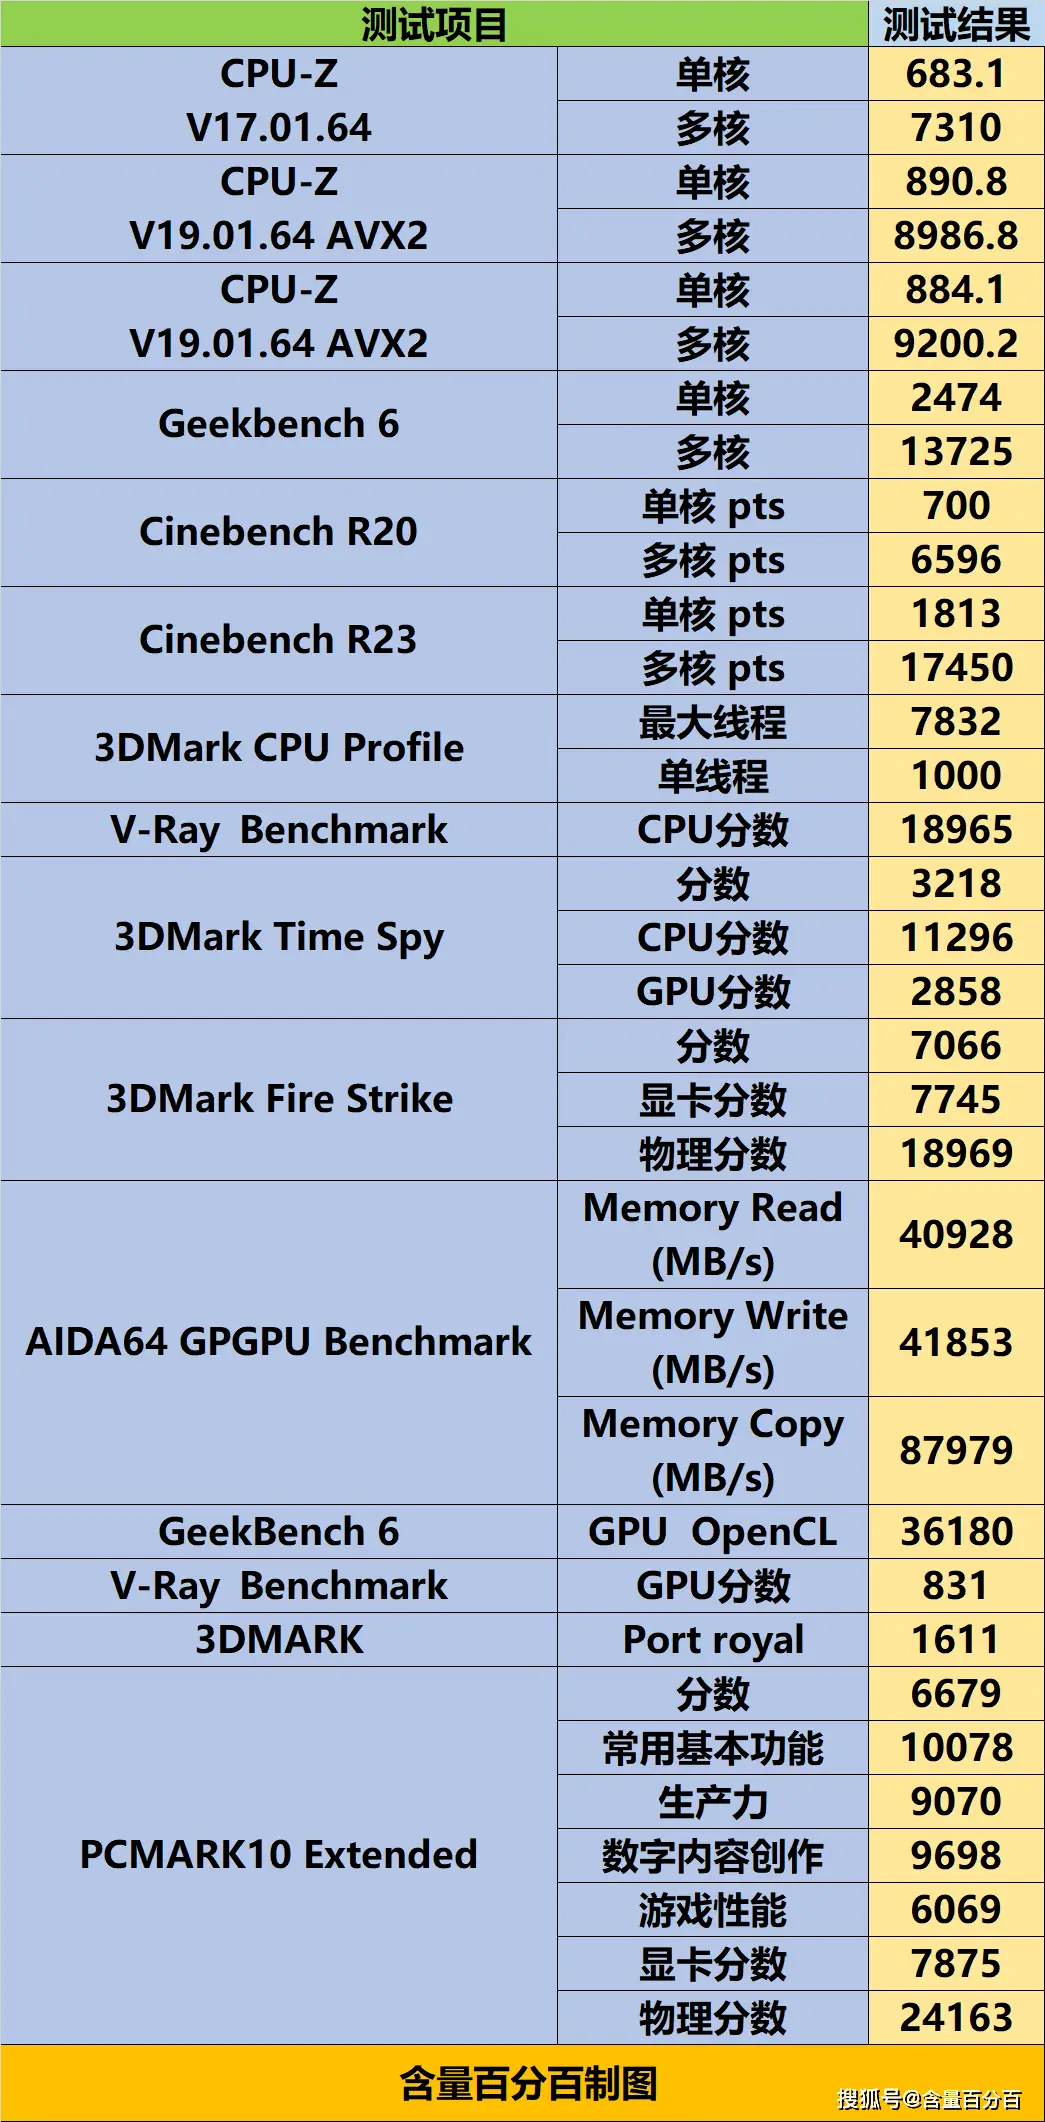 DDR2G41 超频主板：突破技术界限，体验速度与激情的完美碰撞  第1张